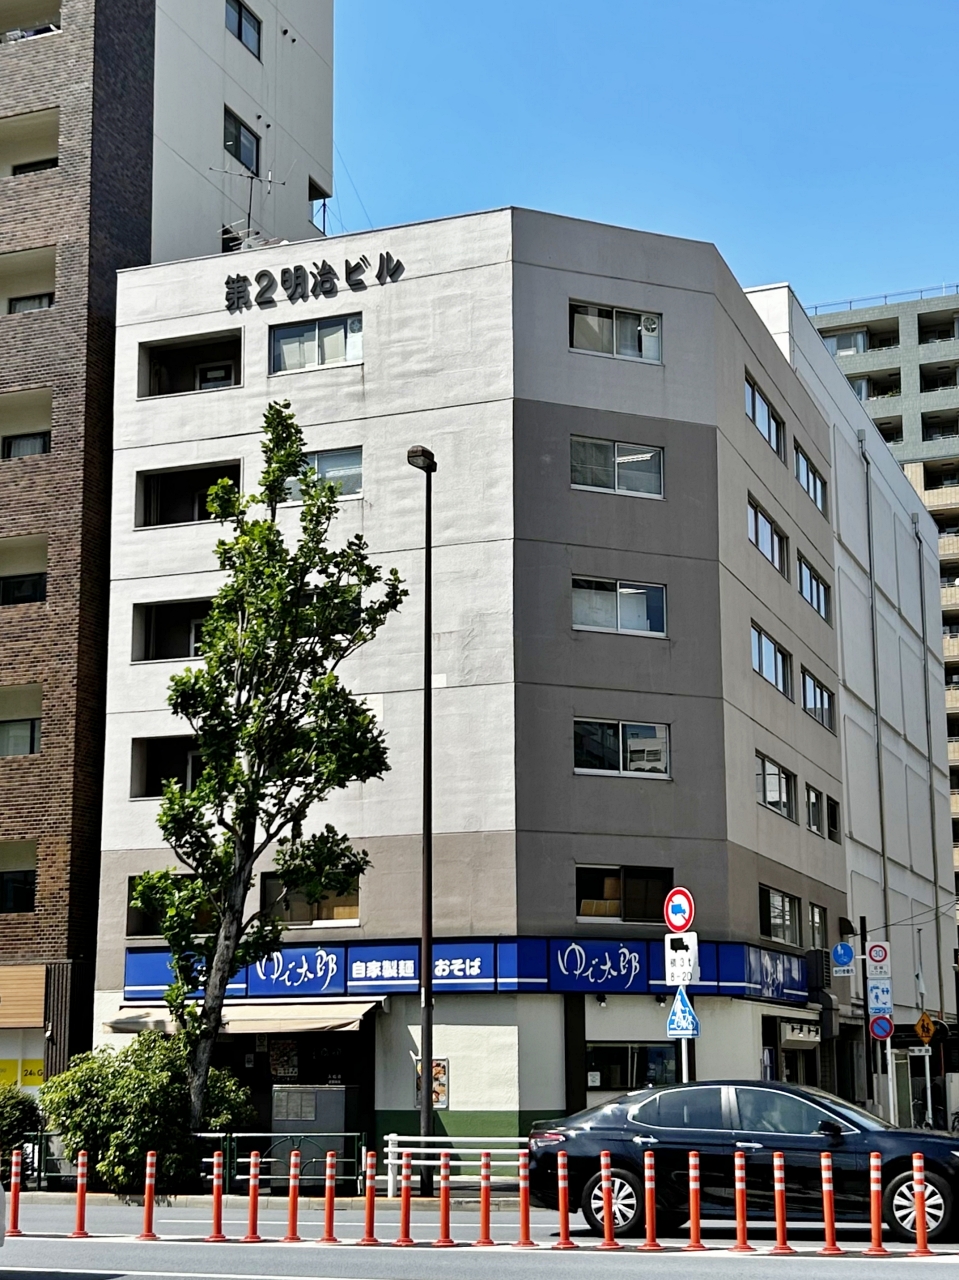 The Second Meijibuilding